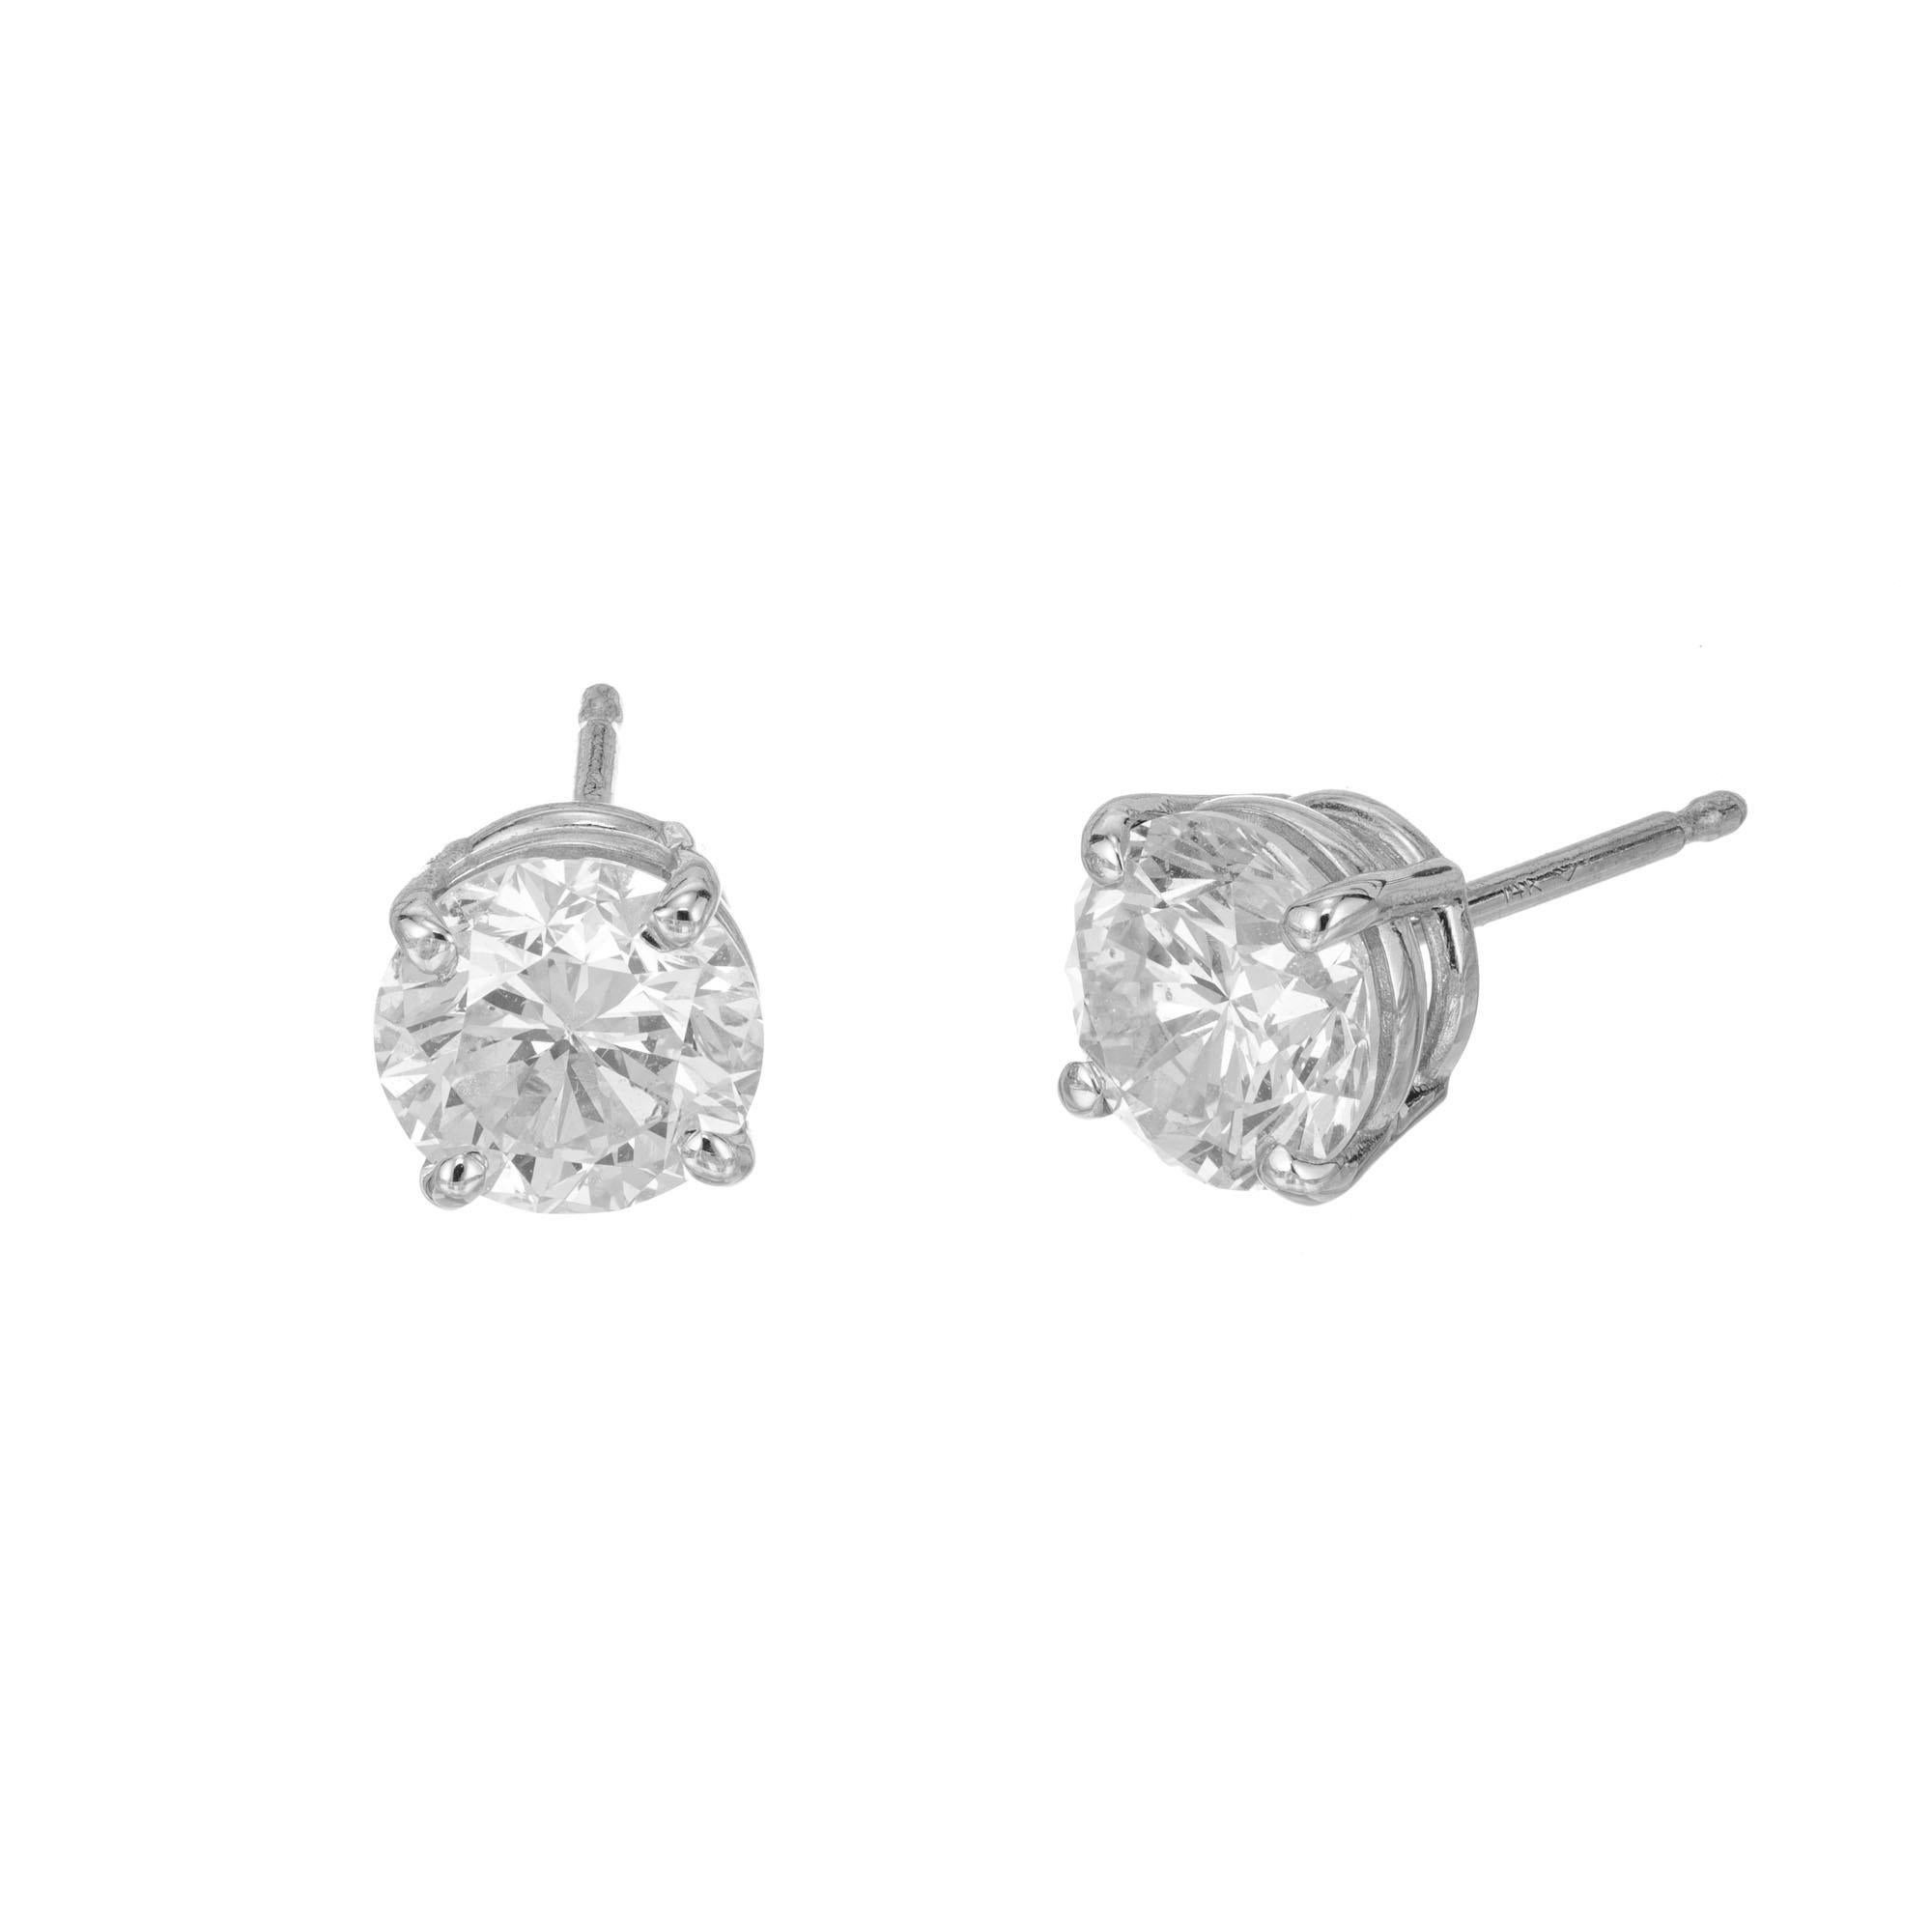 Peter Suchy Brilliant cut diamond platinum stud earrings. 2 EGL certified diamonds in platinum baskets. Created in the Peter Suchy Workshop. 

1 round brilliant cut diamond, G-H SI2 approx. .70cts EGL Certificate # EGL400148925D
1 round brilliant